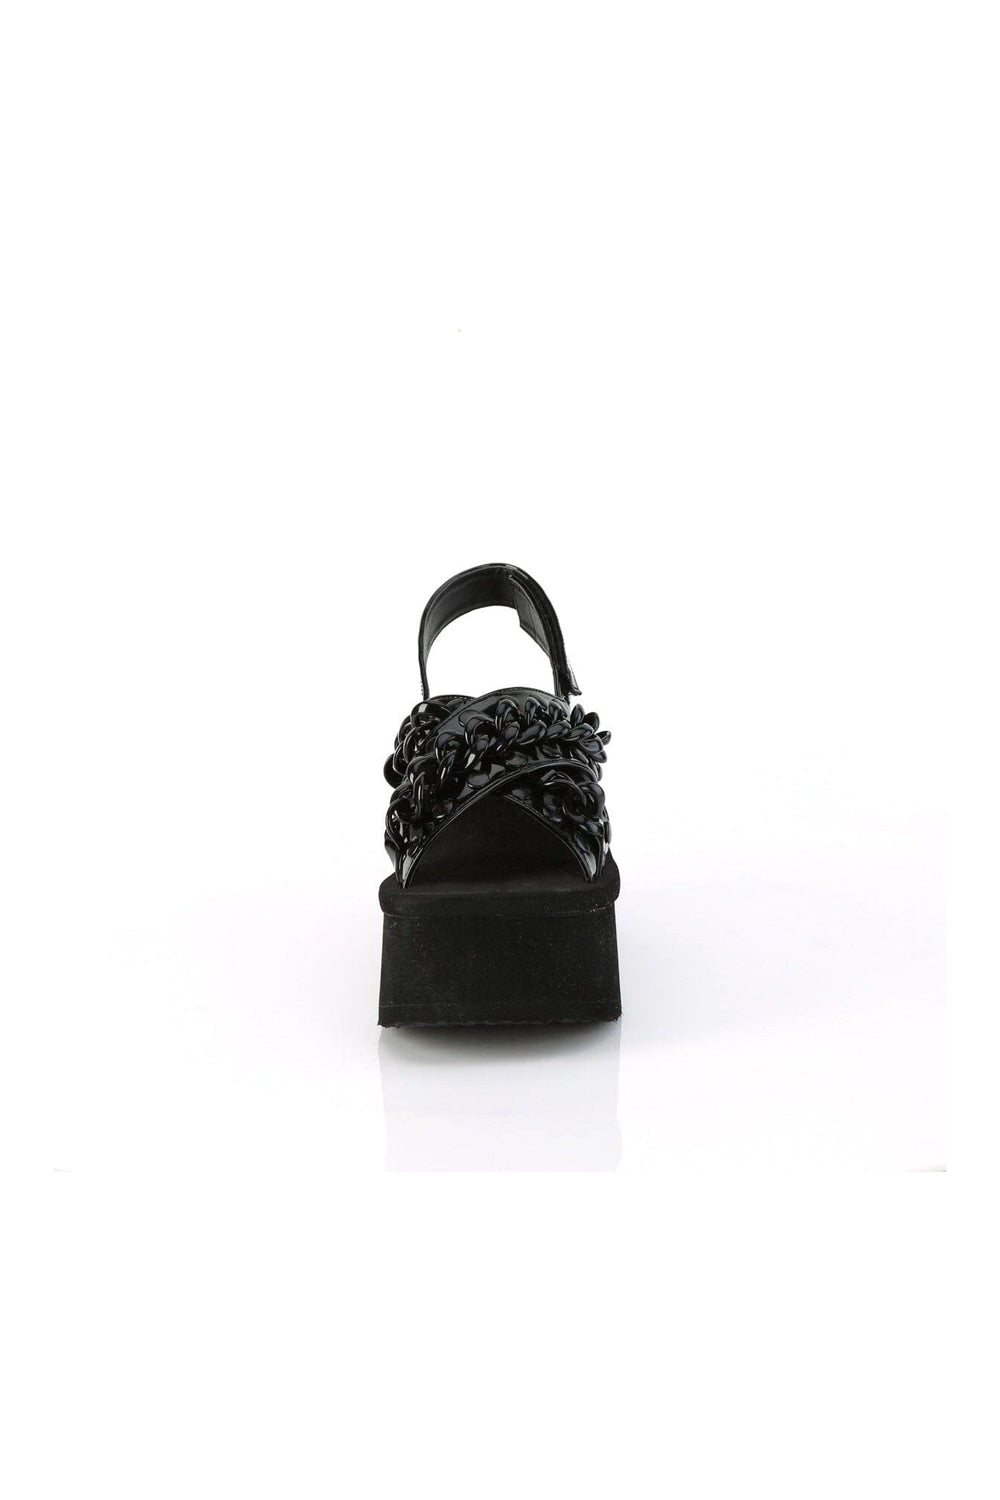 FUNN-12 Black Hologram Patent Sandal-Sandals-Demonia-SEXYSHOES.COM